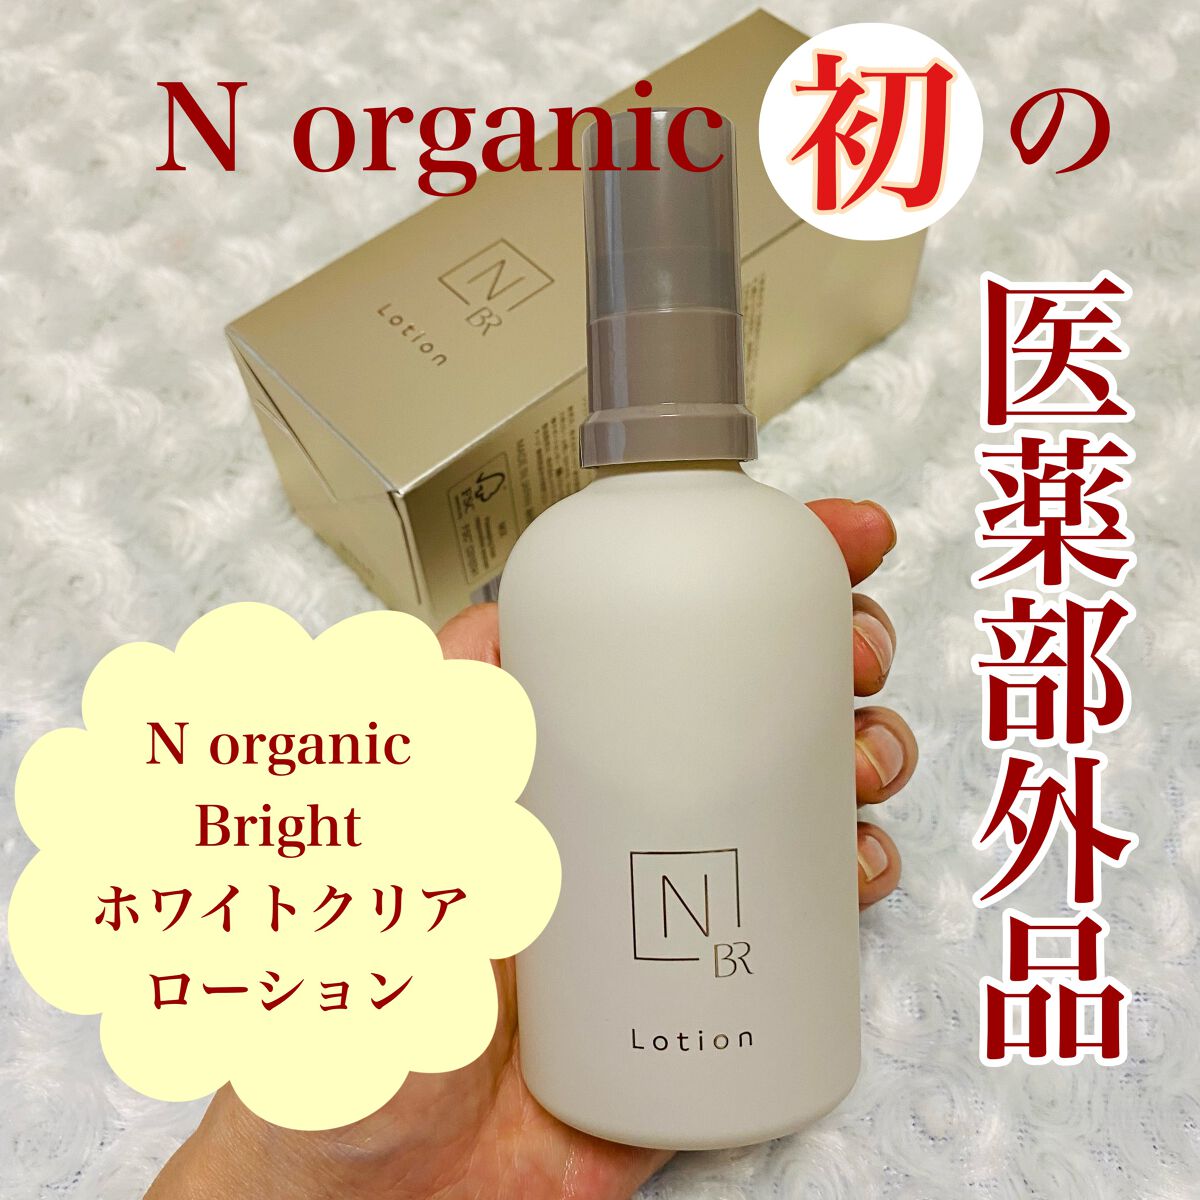 N organic Bright ローション クリームトライアルセット - 化粧水